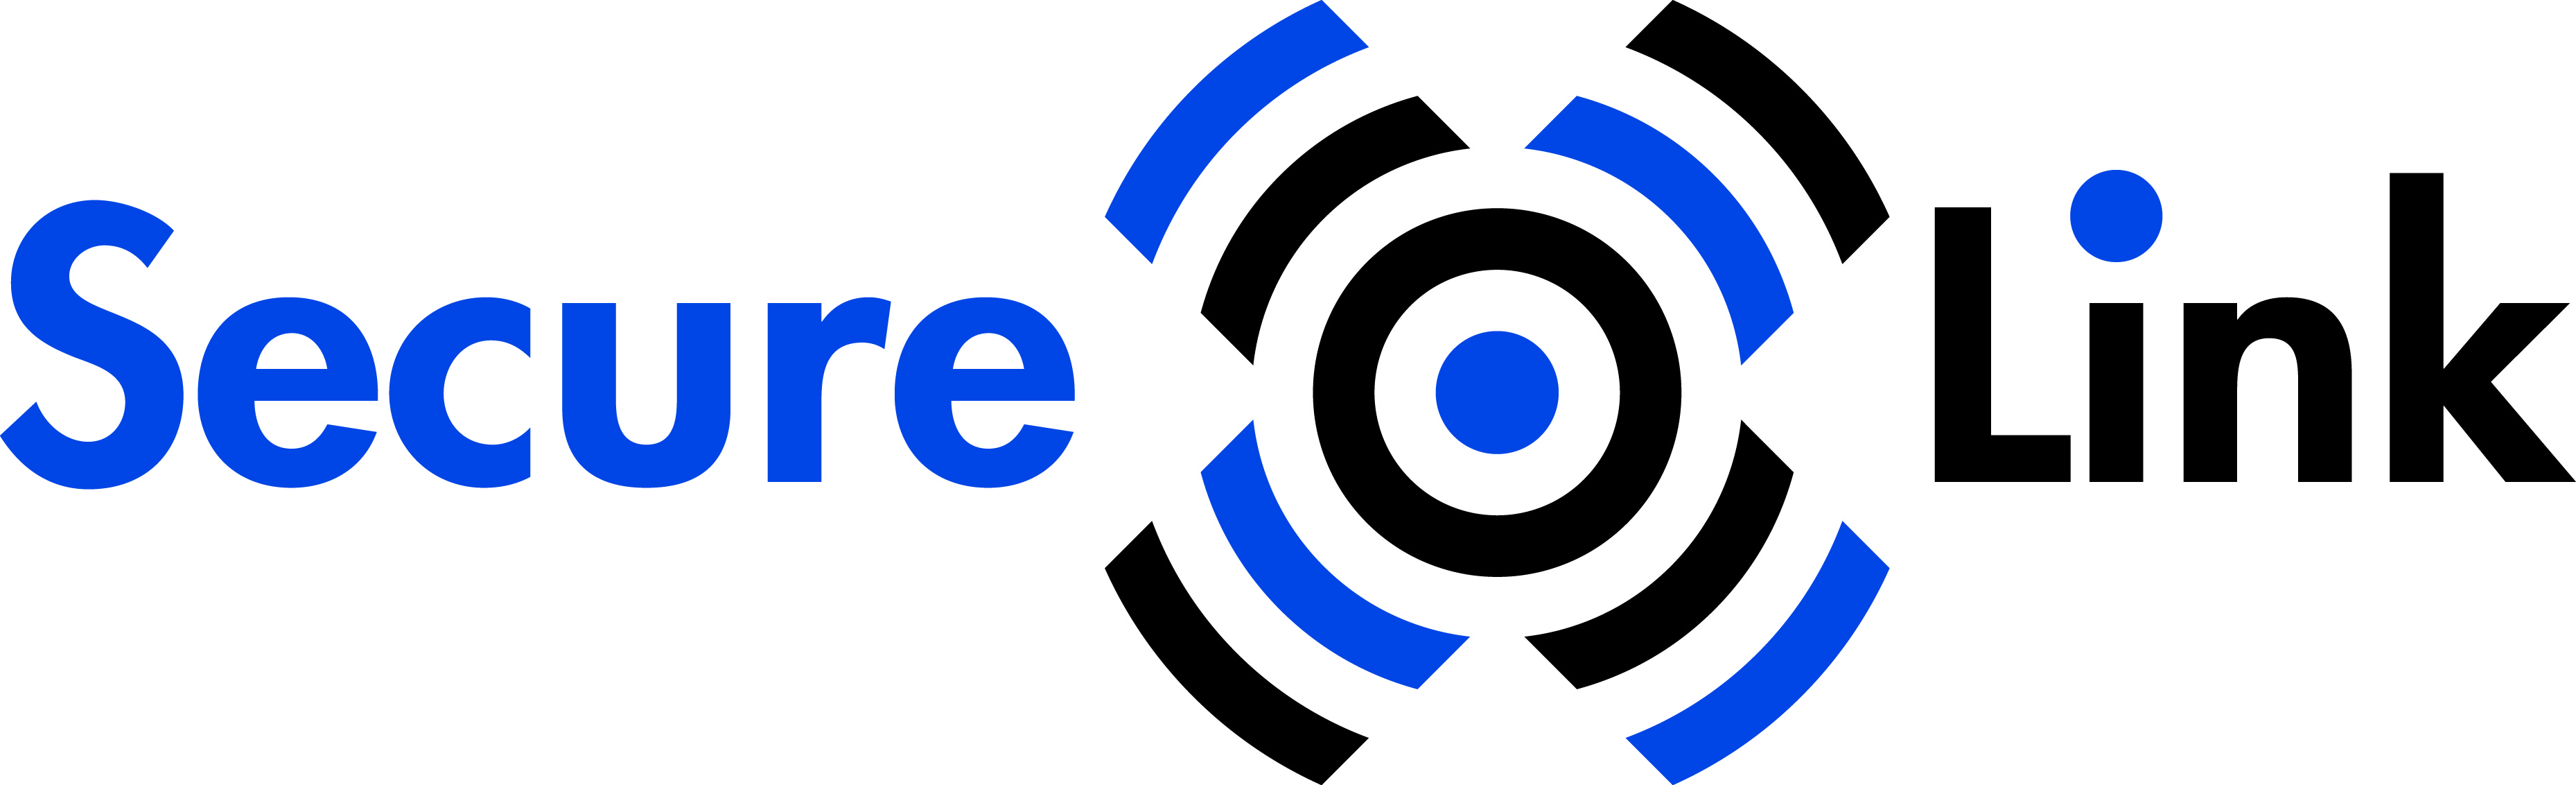 Securelink-Logo-CMYK_zonder_ondertitel.jpg